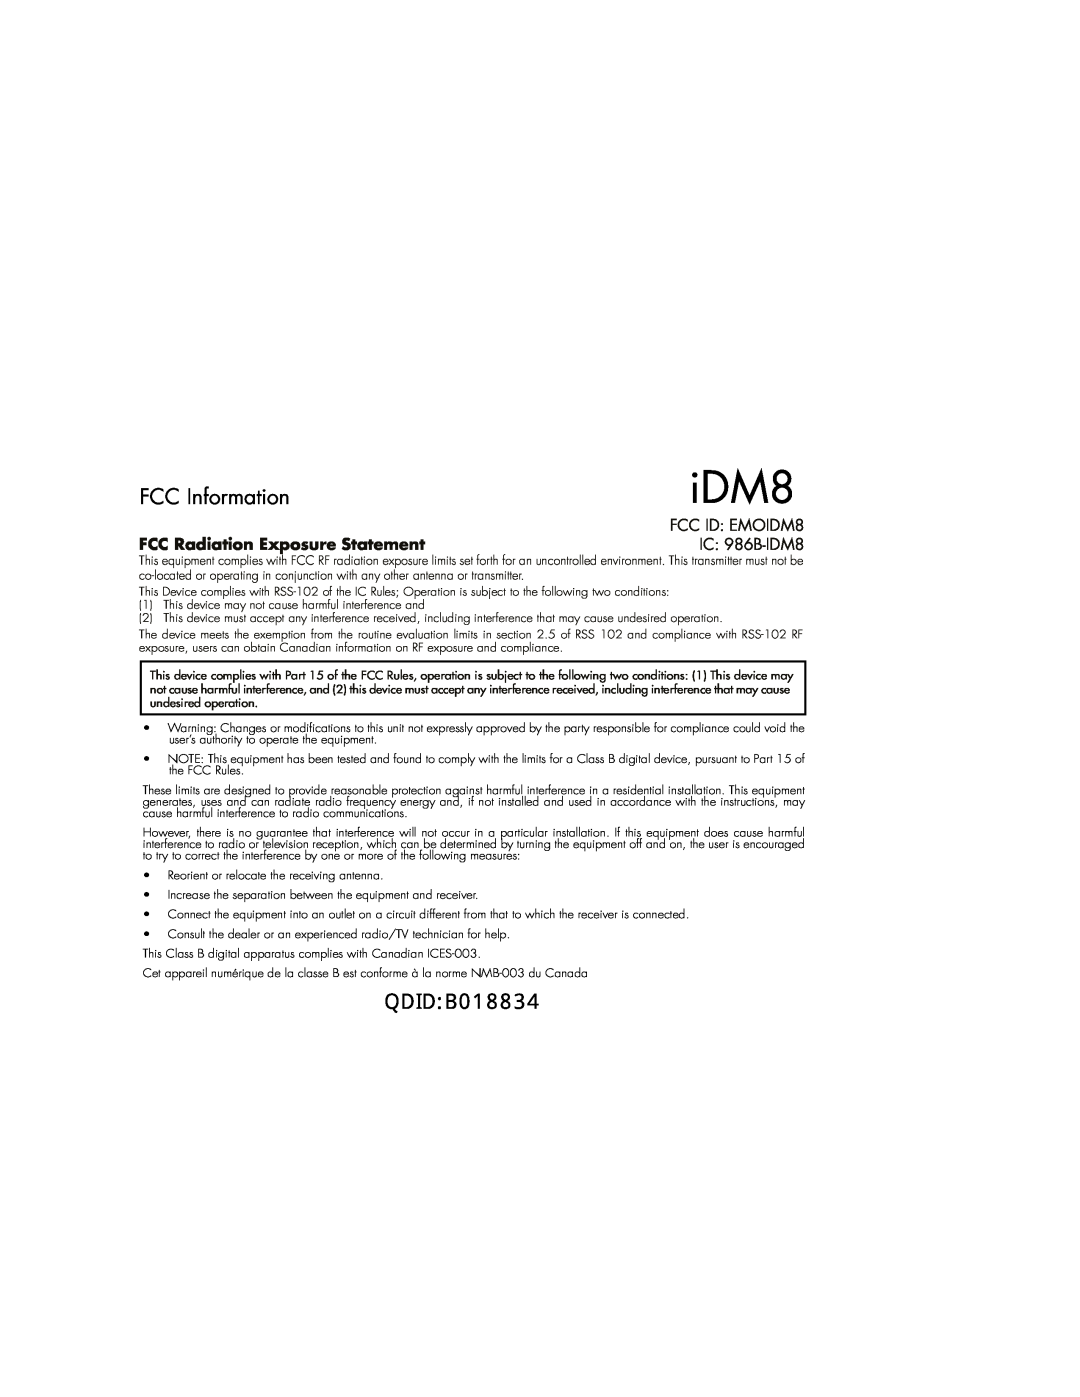 iHome iDM8 instruction manual QDID B018834, FCC Information, FCC Radiation Exposure Statement, FCC ID EMOIDM8, IC 986B-IDM8 